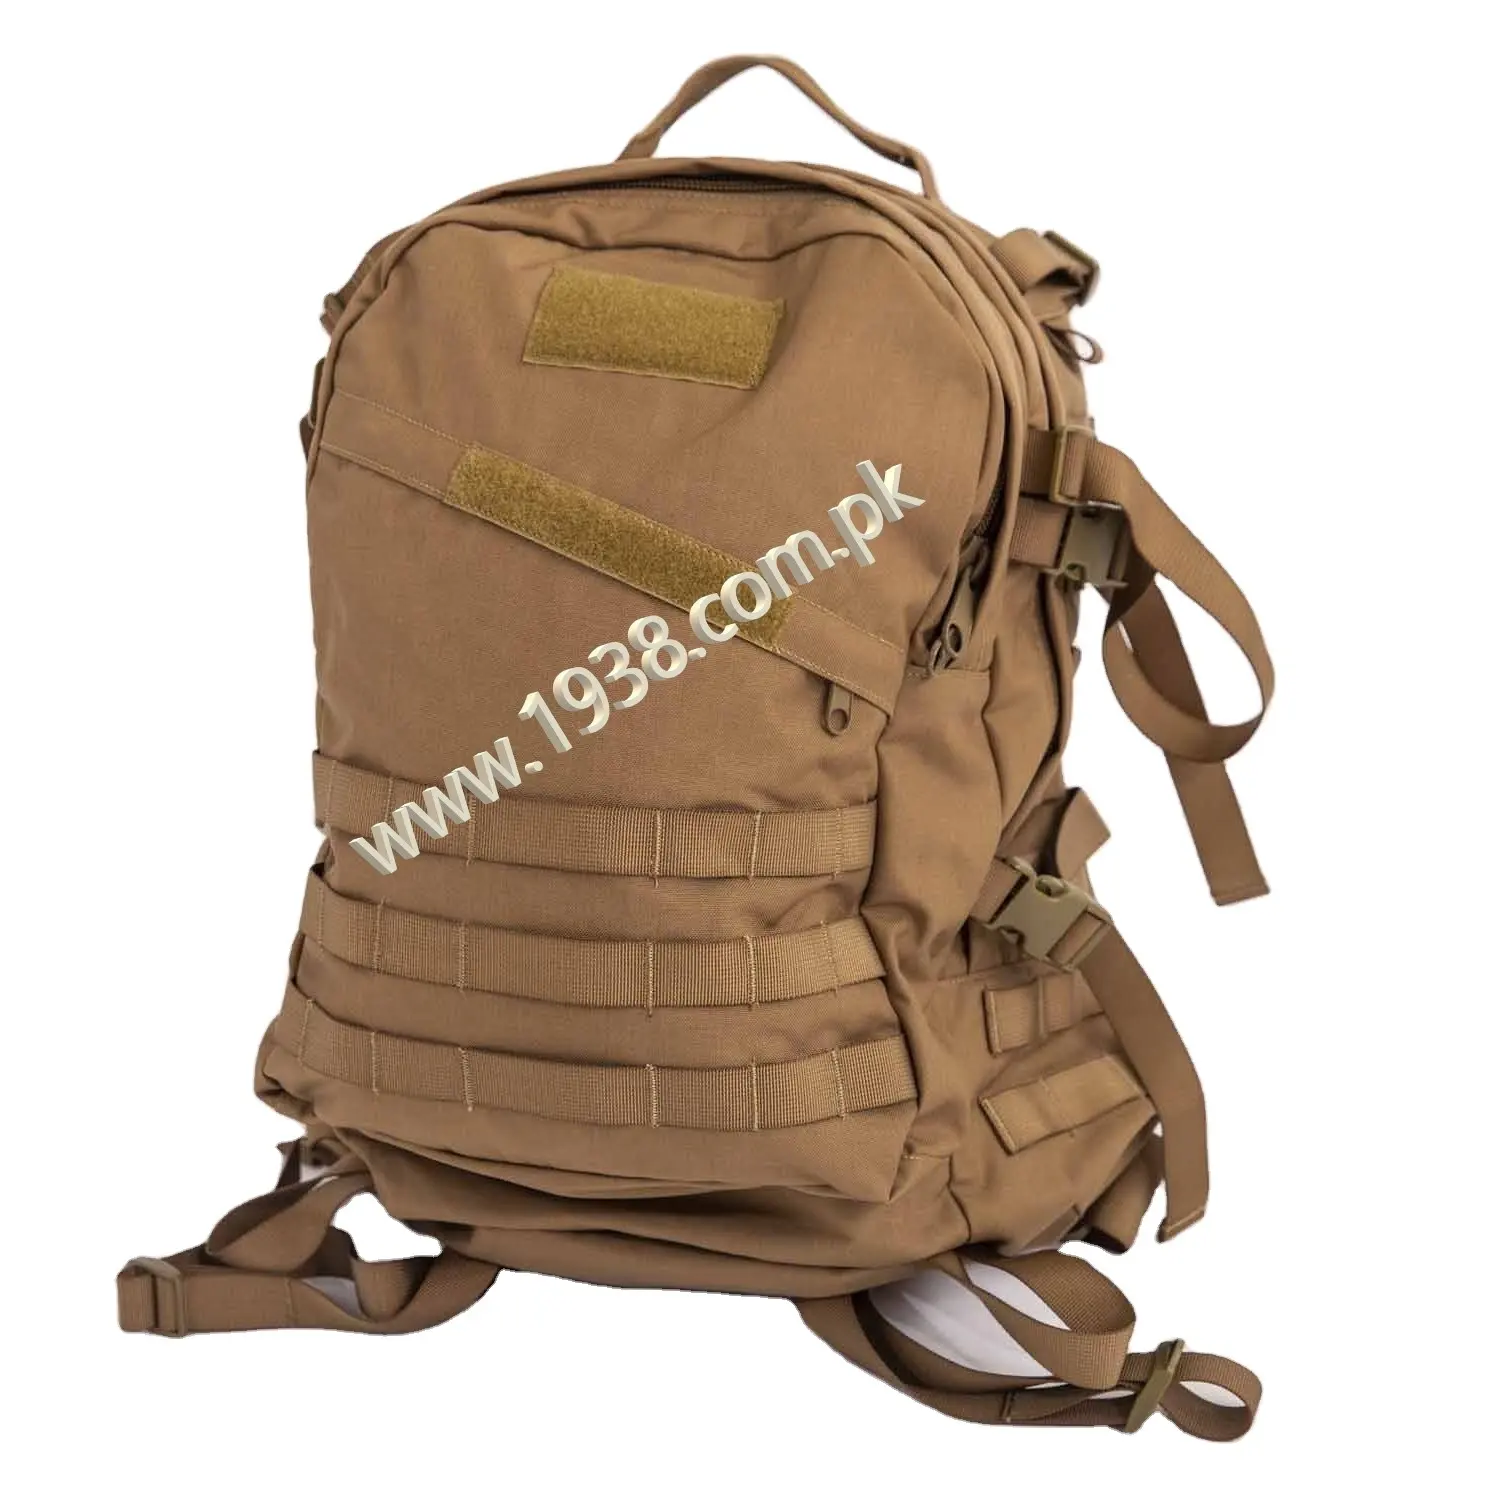 Day Sack Tactical Backpack Outdoor Camping Hiking Trekking Survival One Shoulder Travel Pack Bag